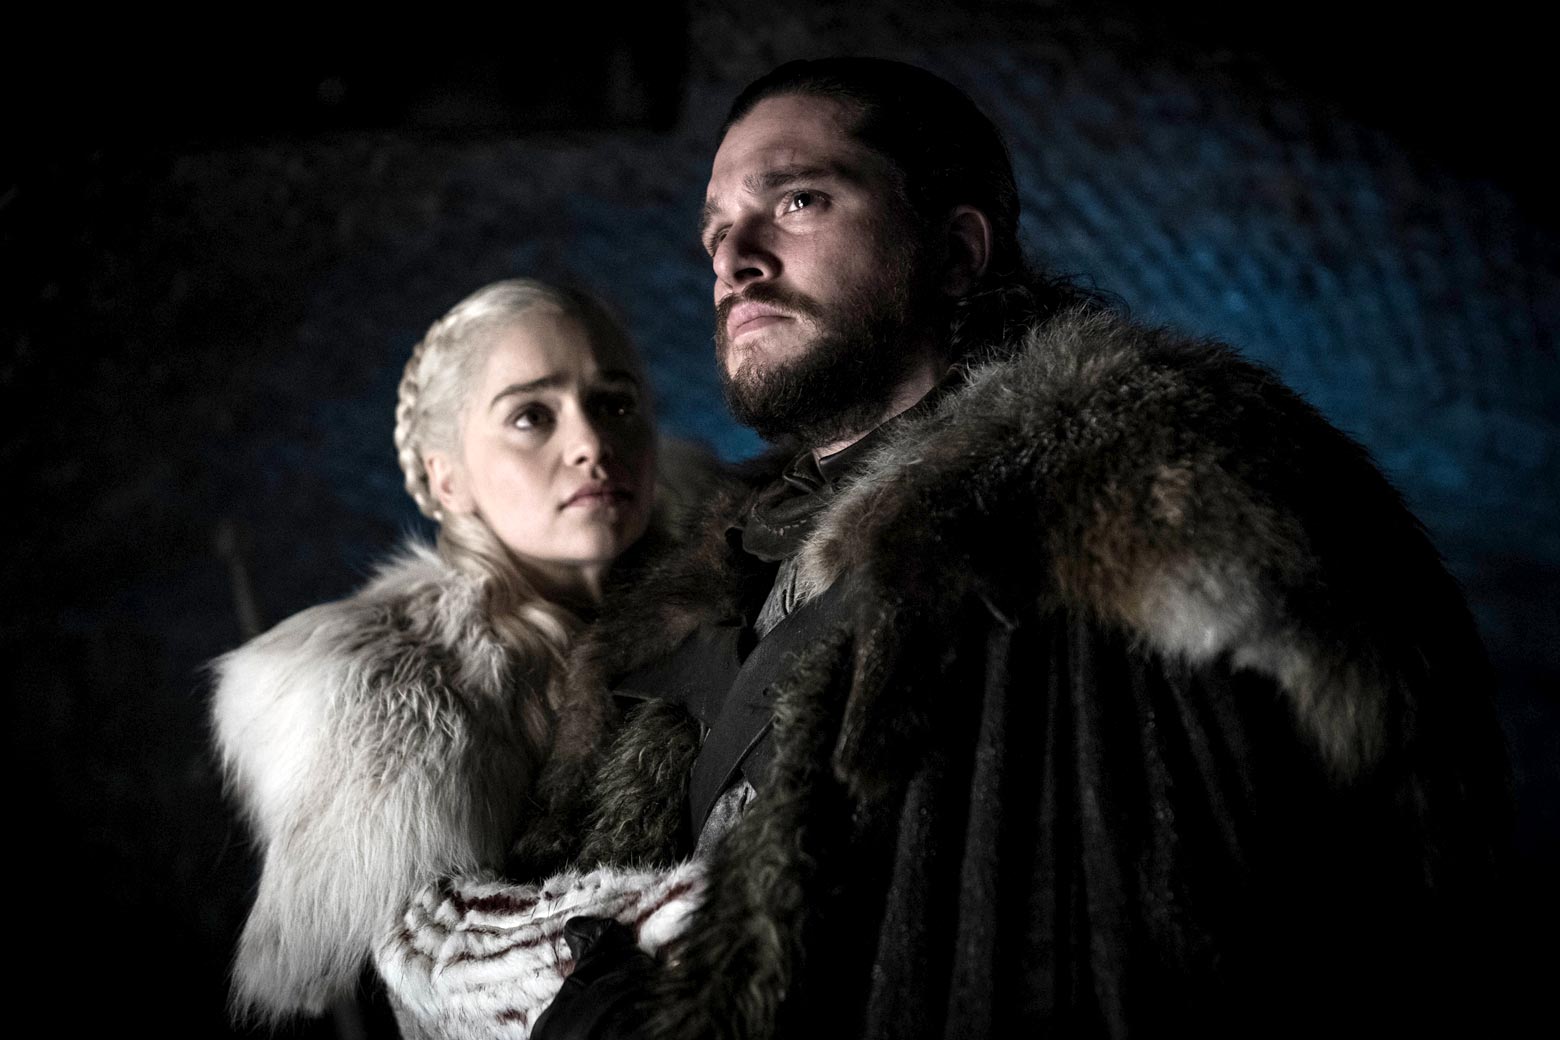 Emilia Clarke as Daenerys Targaryen, Kit Harington as Jon Snow in Game of Thrones Season 8, Episode 2.